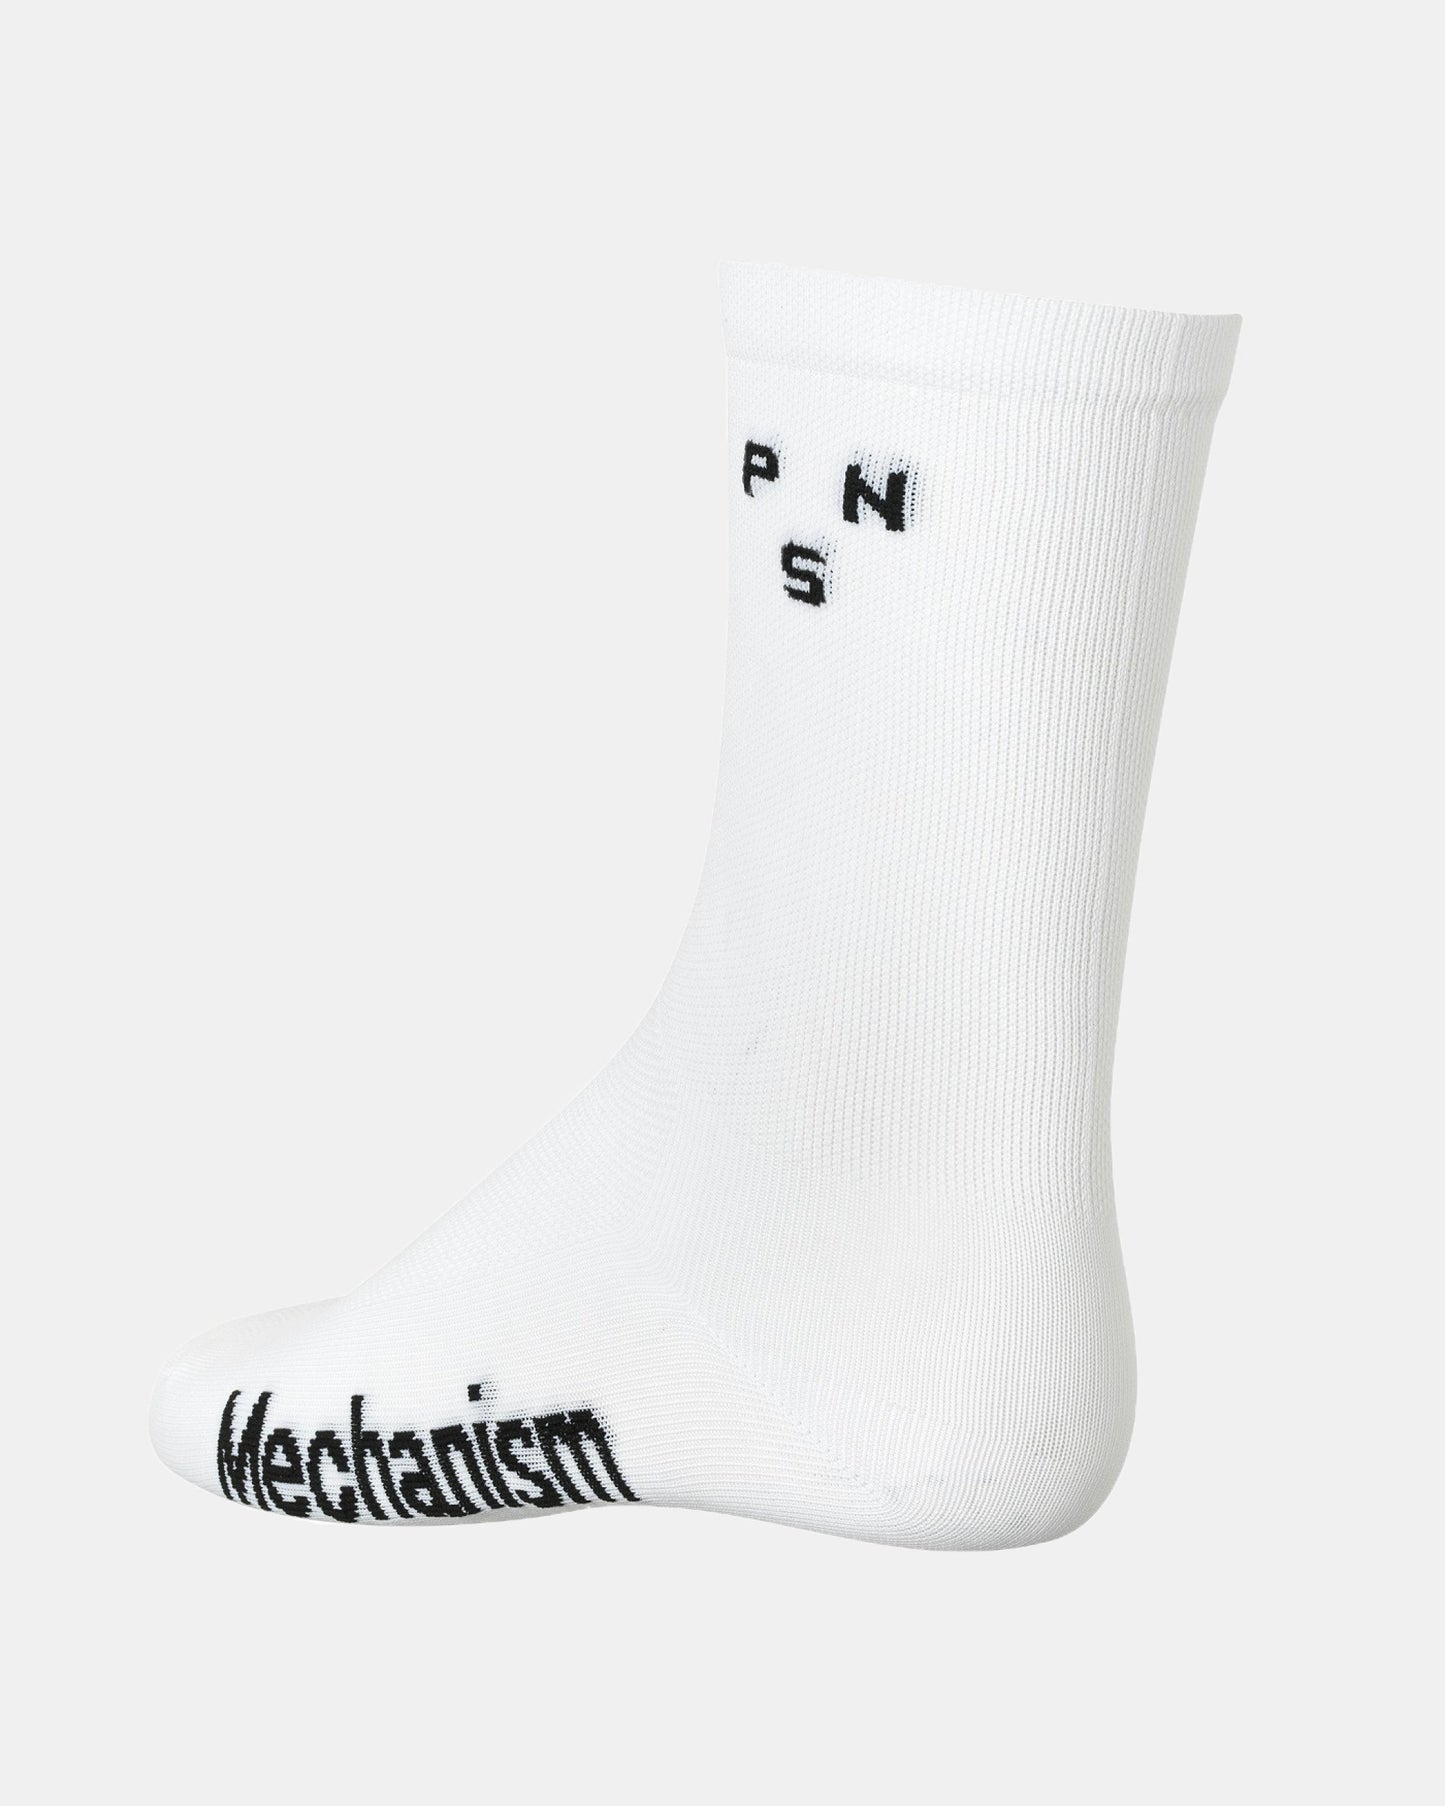 PNS Mechanism Socks